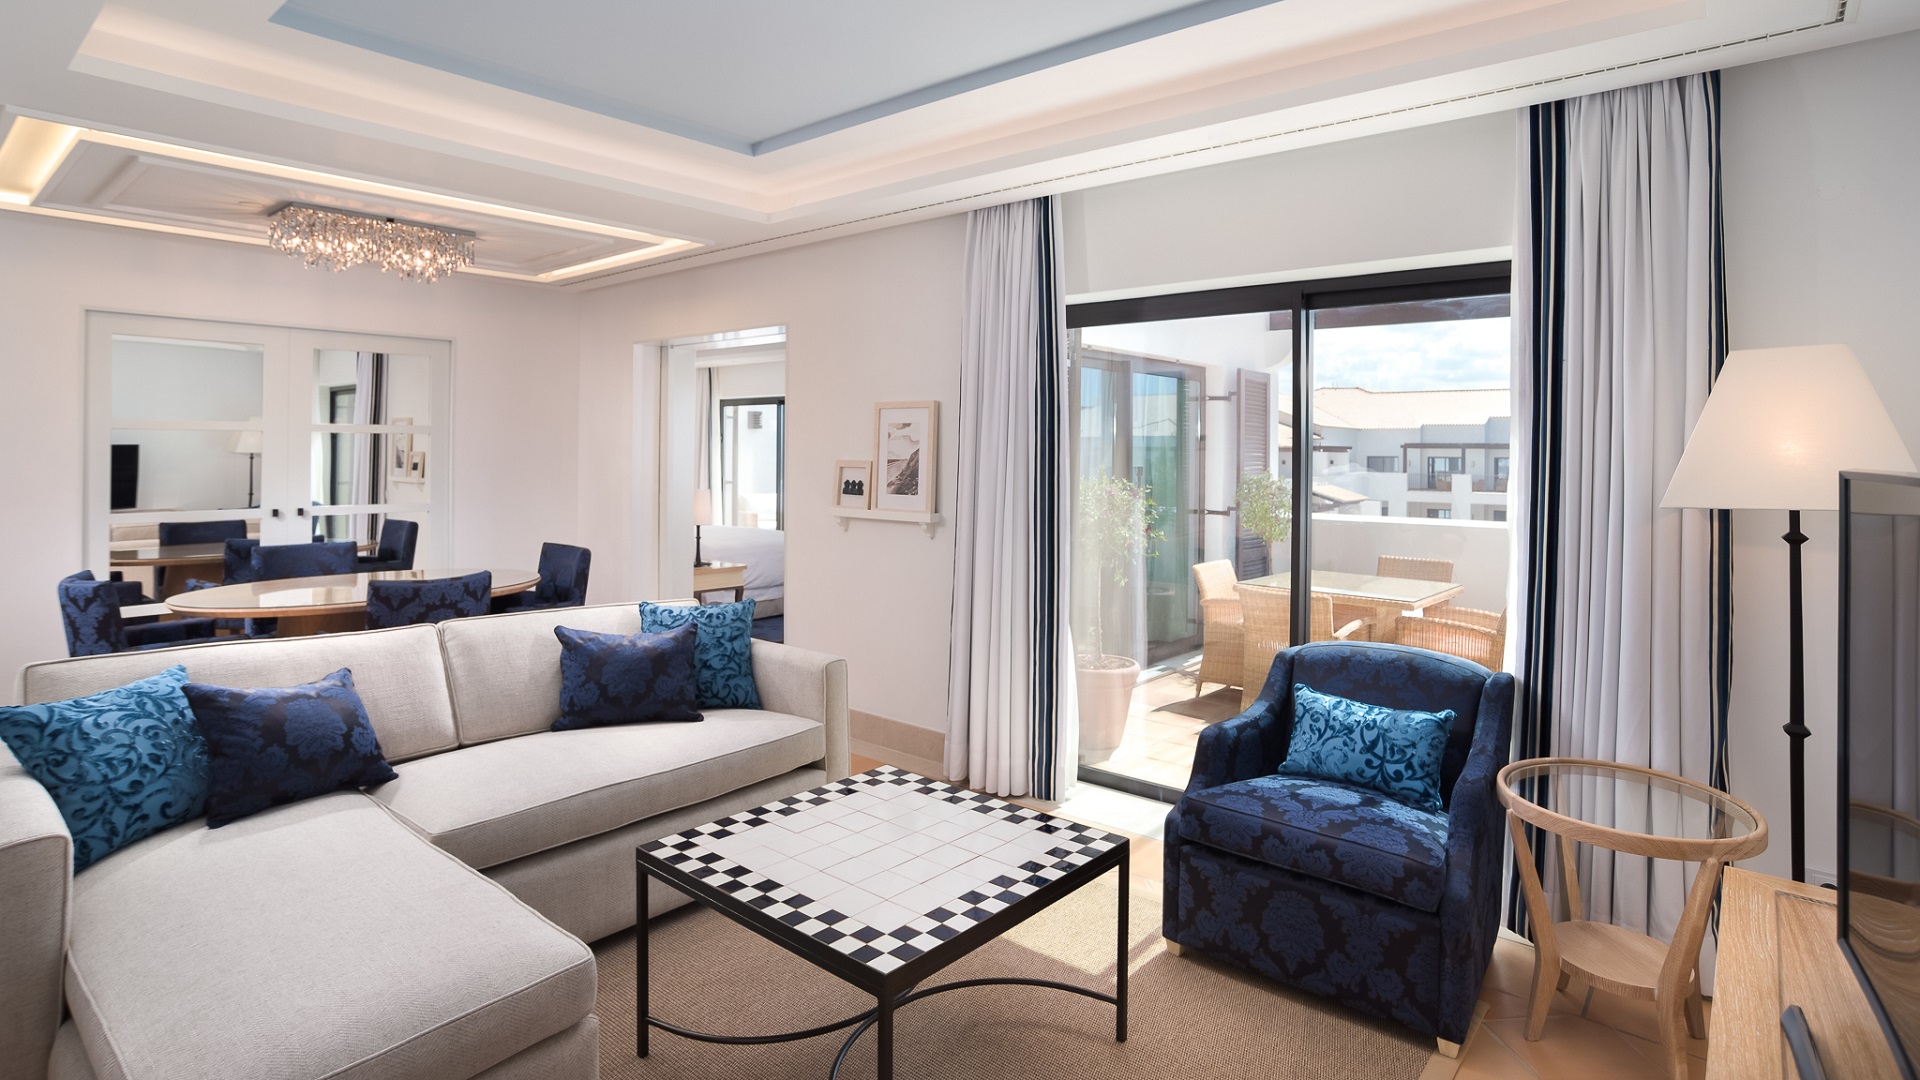 Pine Cliffs Hotel, A Luxury Collection Resort, Algarve